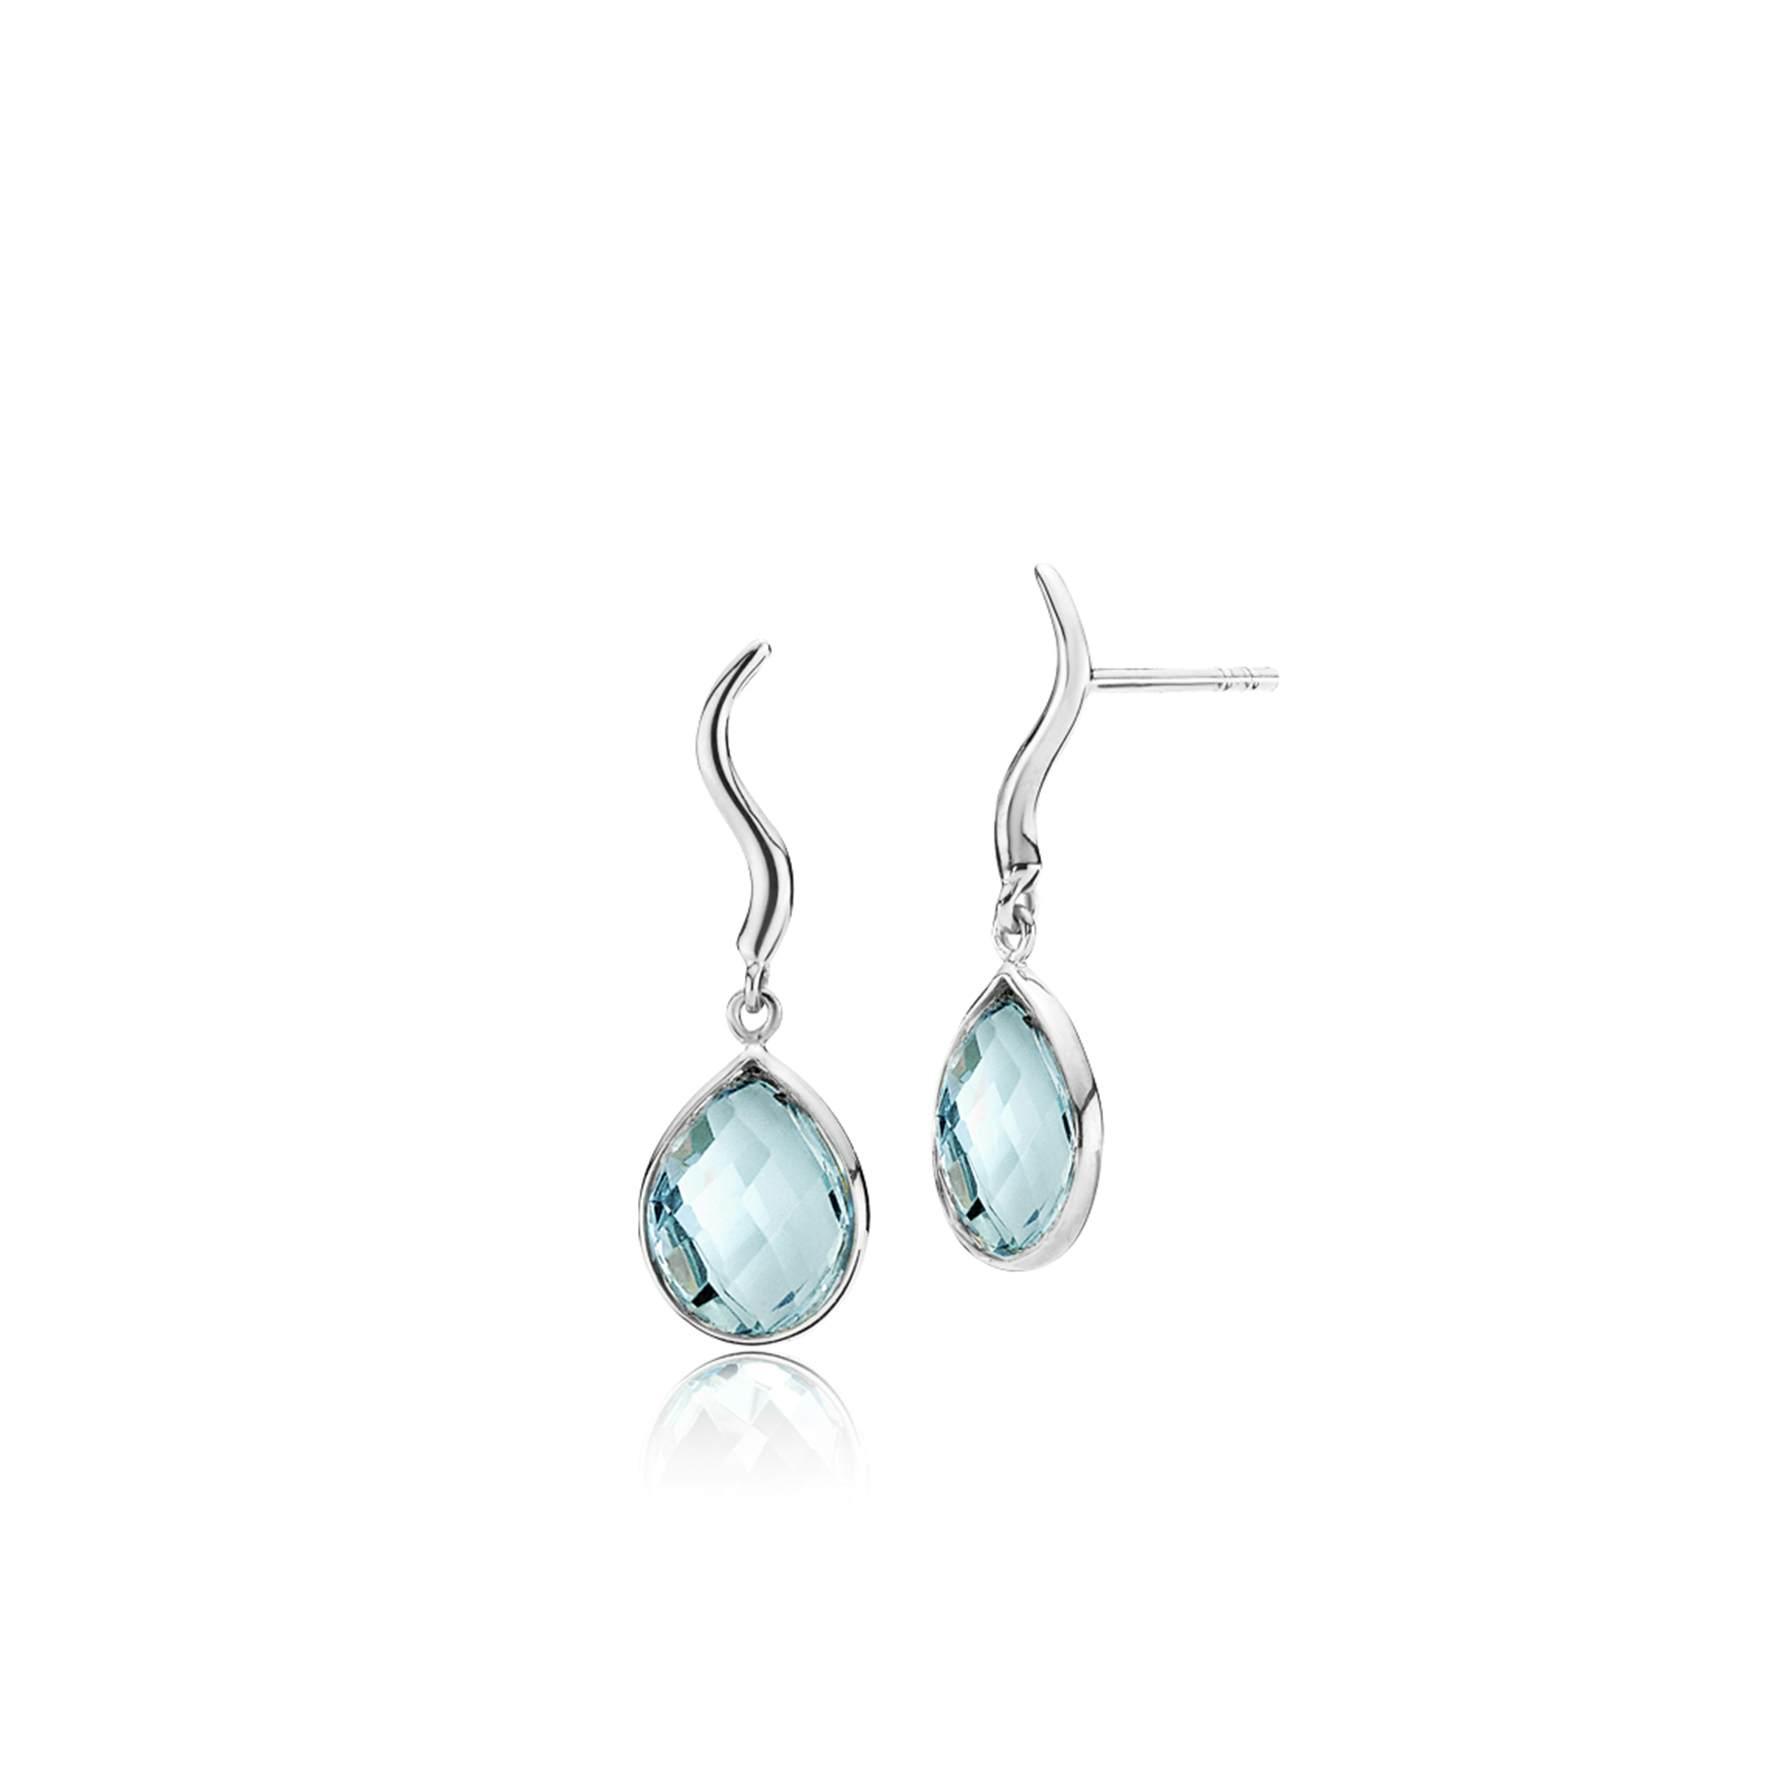 Marie Aqua Blue Earrings von Izabel Camille in Silber Sterling 925